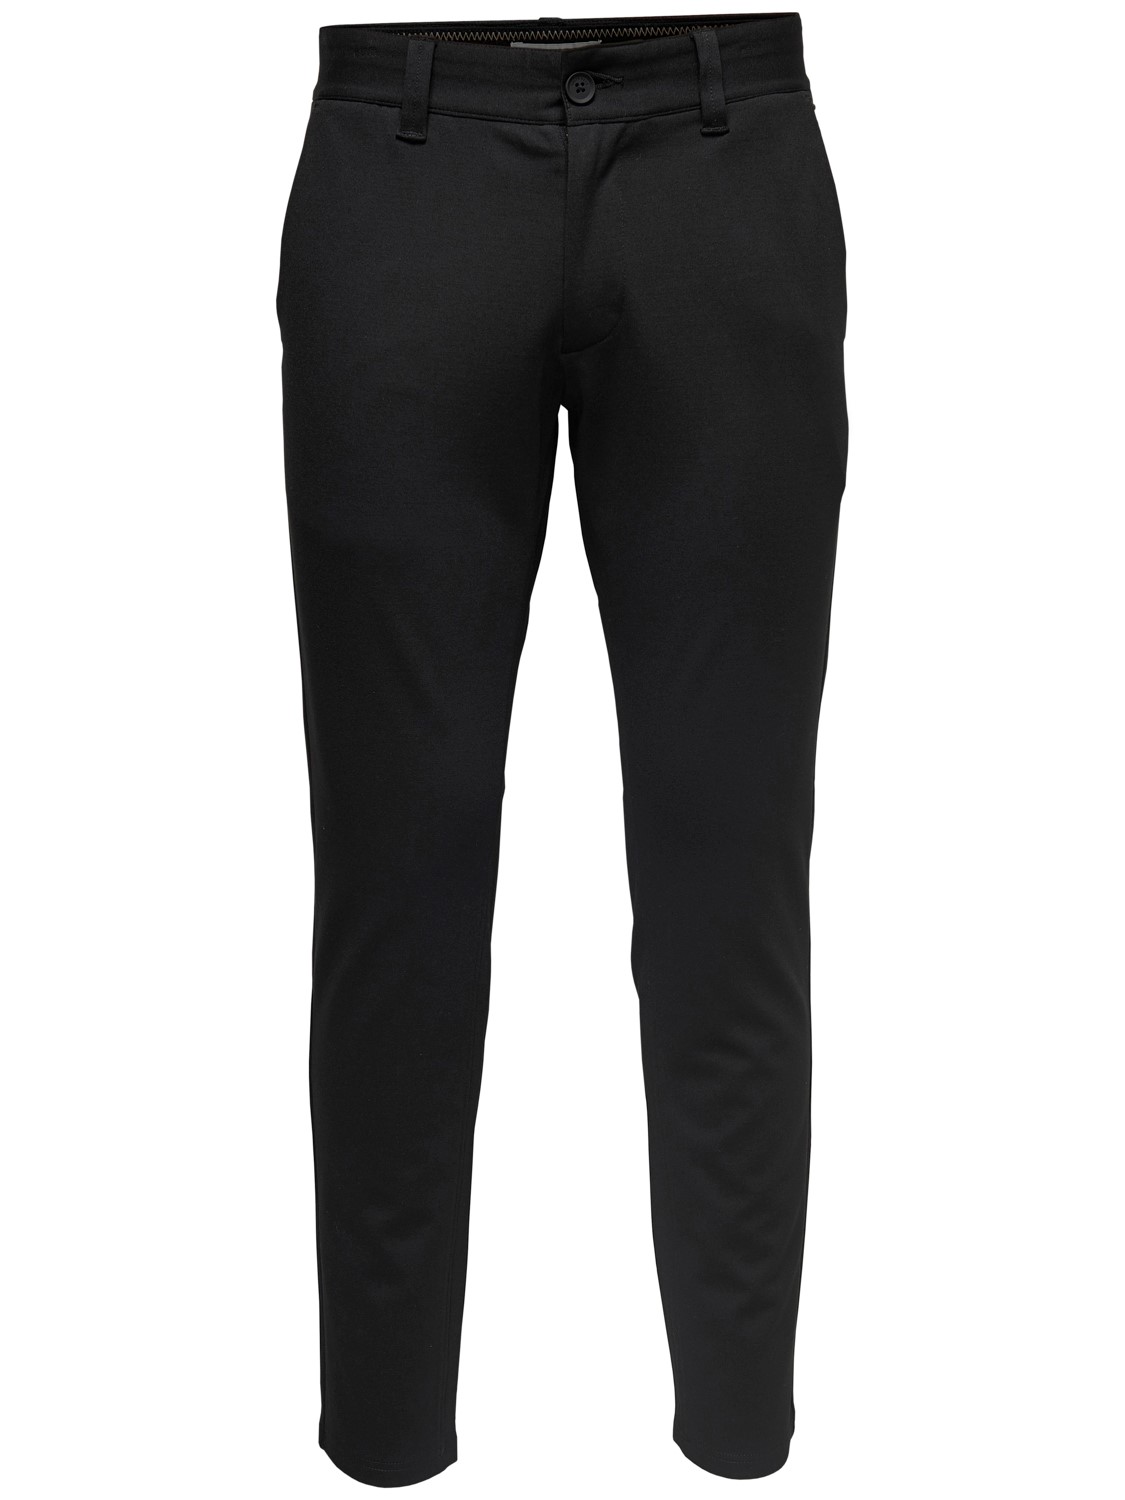 Тканевые брюки ONLY Stoff/Chino ONSMARK PANT GW 0209 tapered, черный брюки onsmark pant only